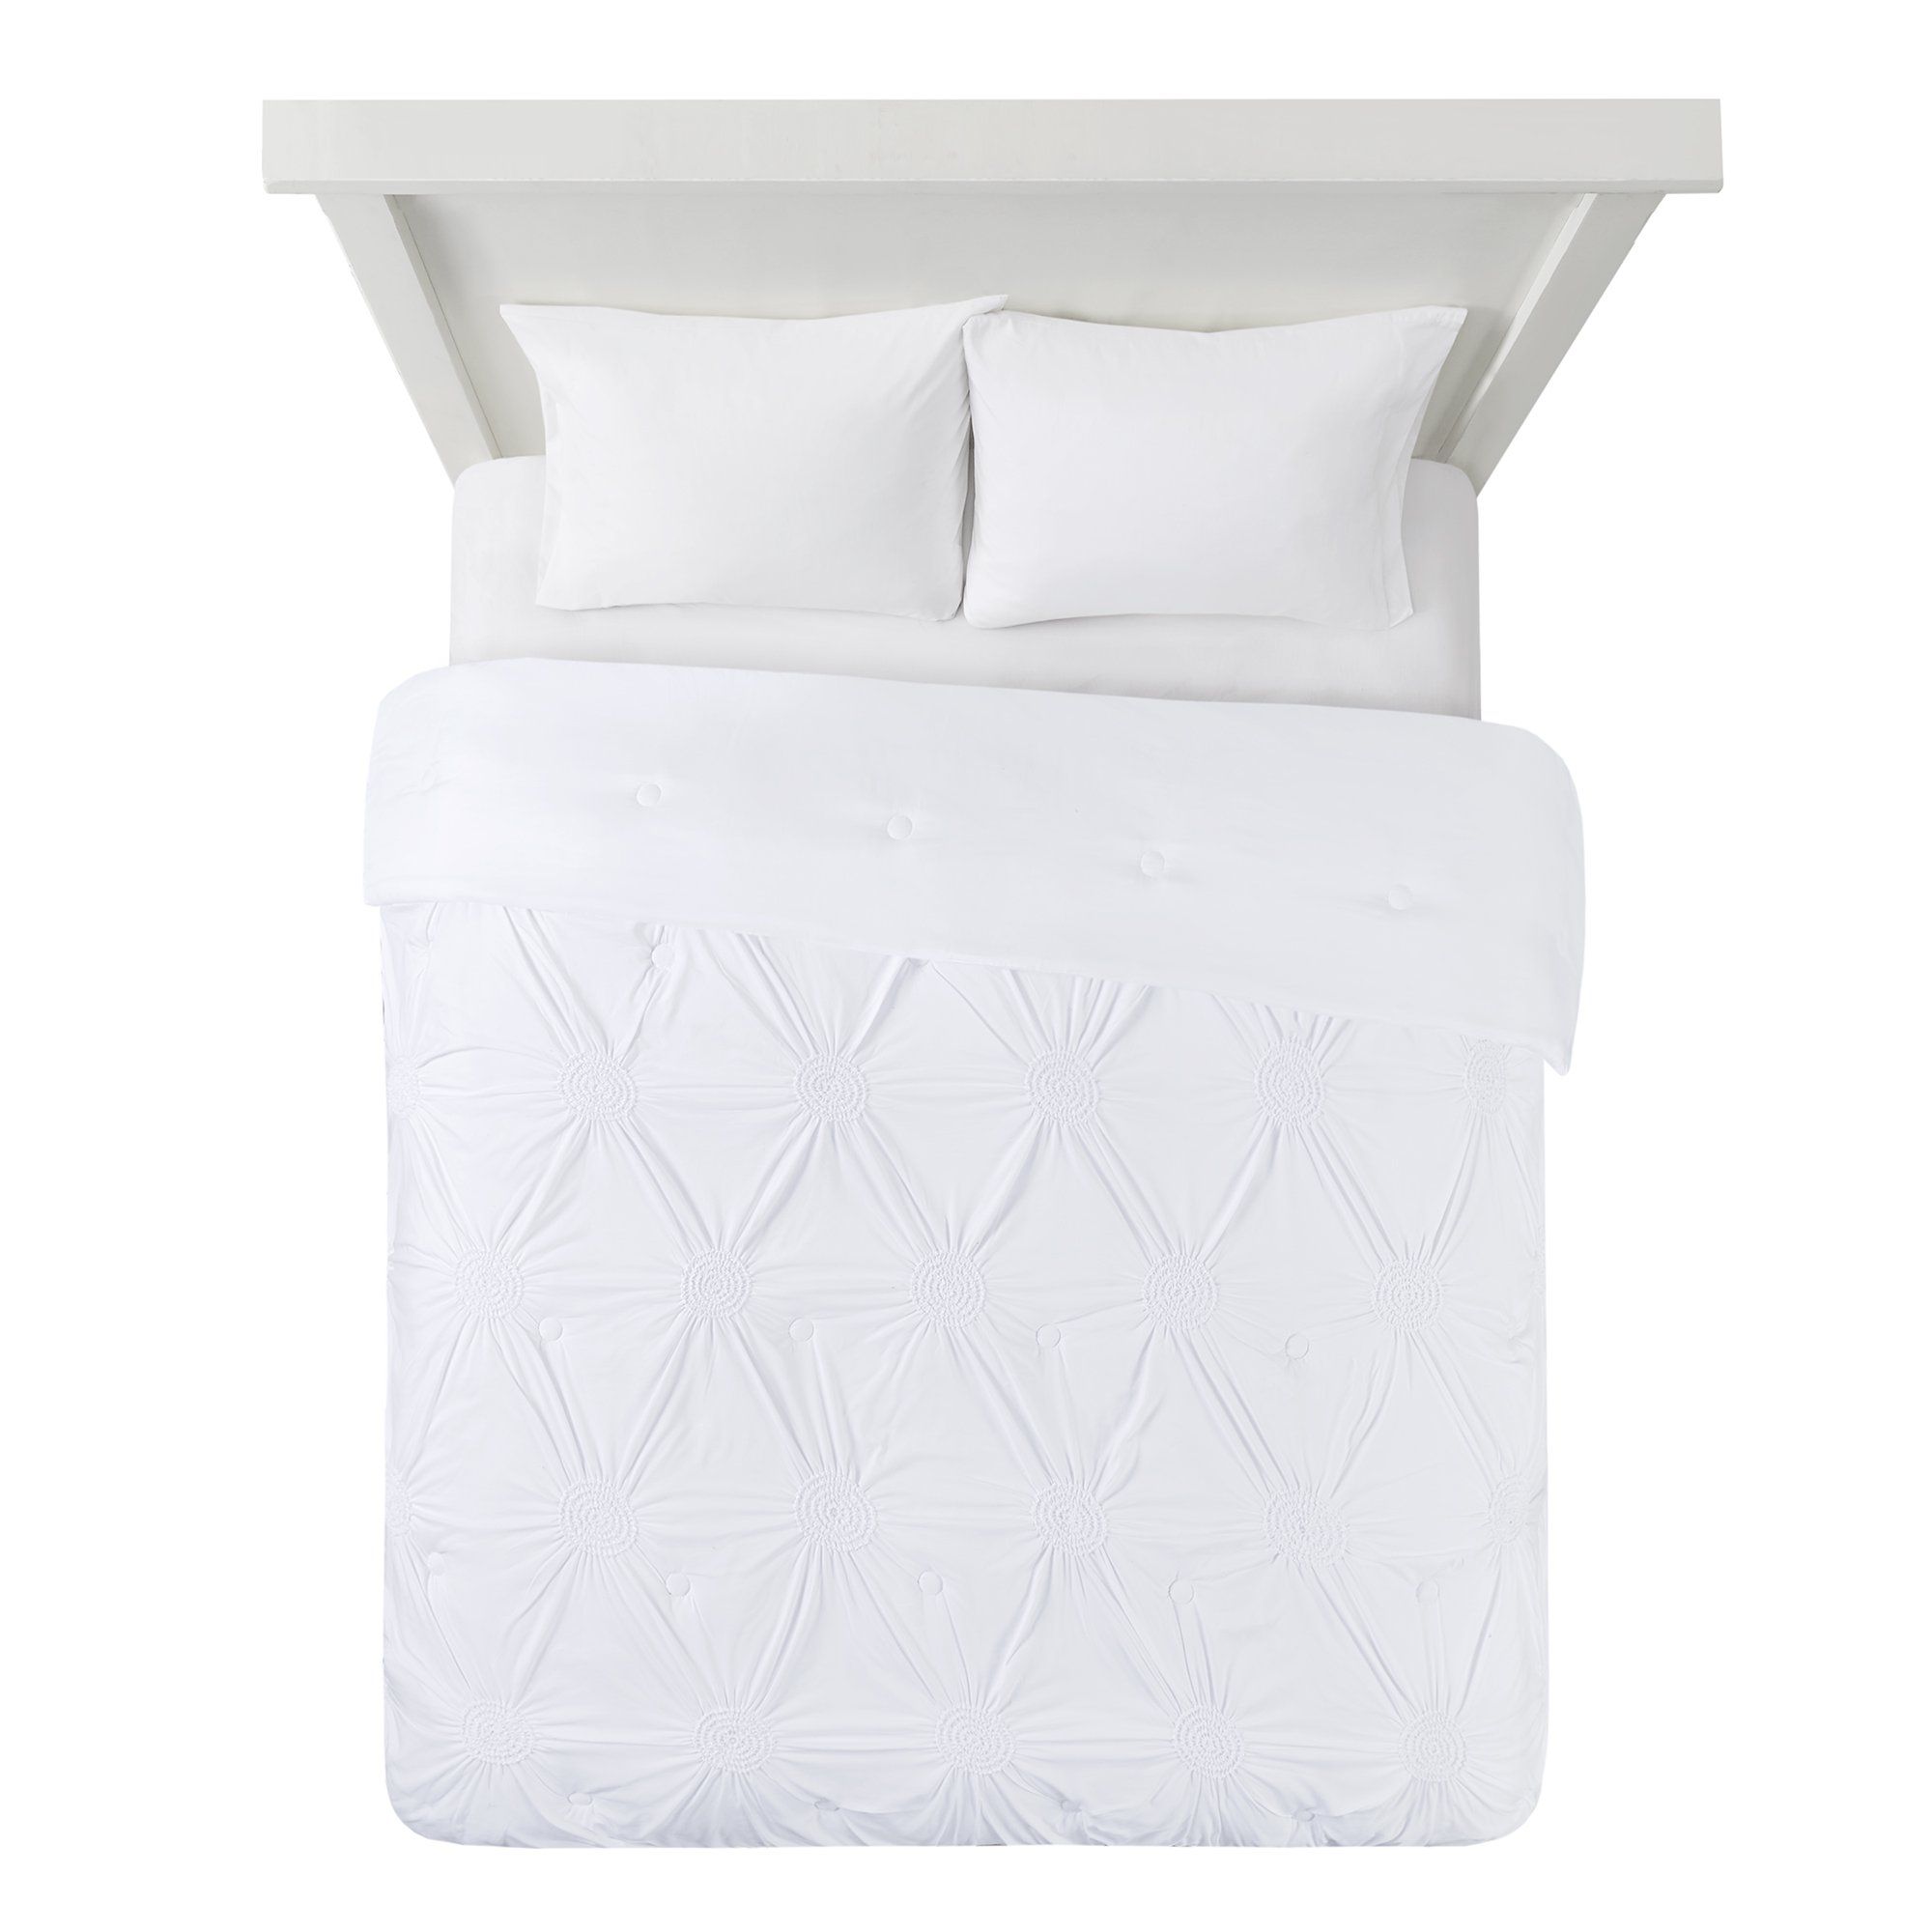 Mainstays Elastic Ruching Comforter in a Bag, Full/Queen, White | Walmart (US)